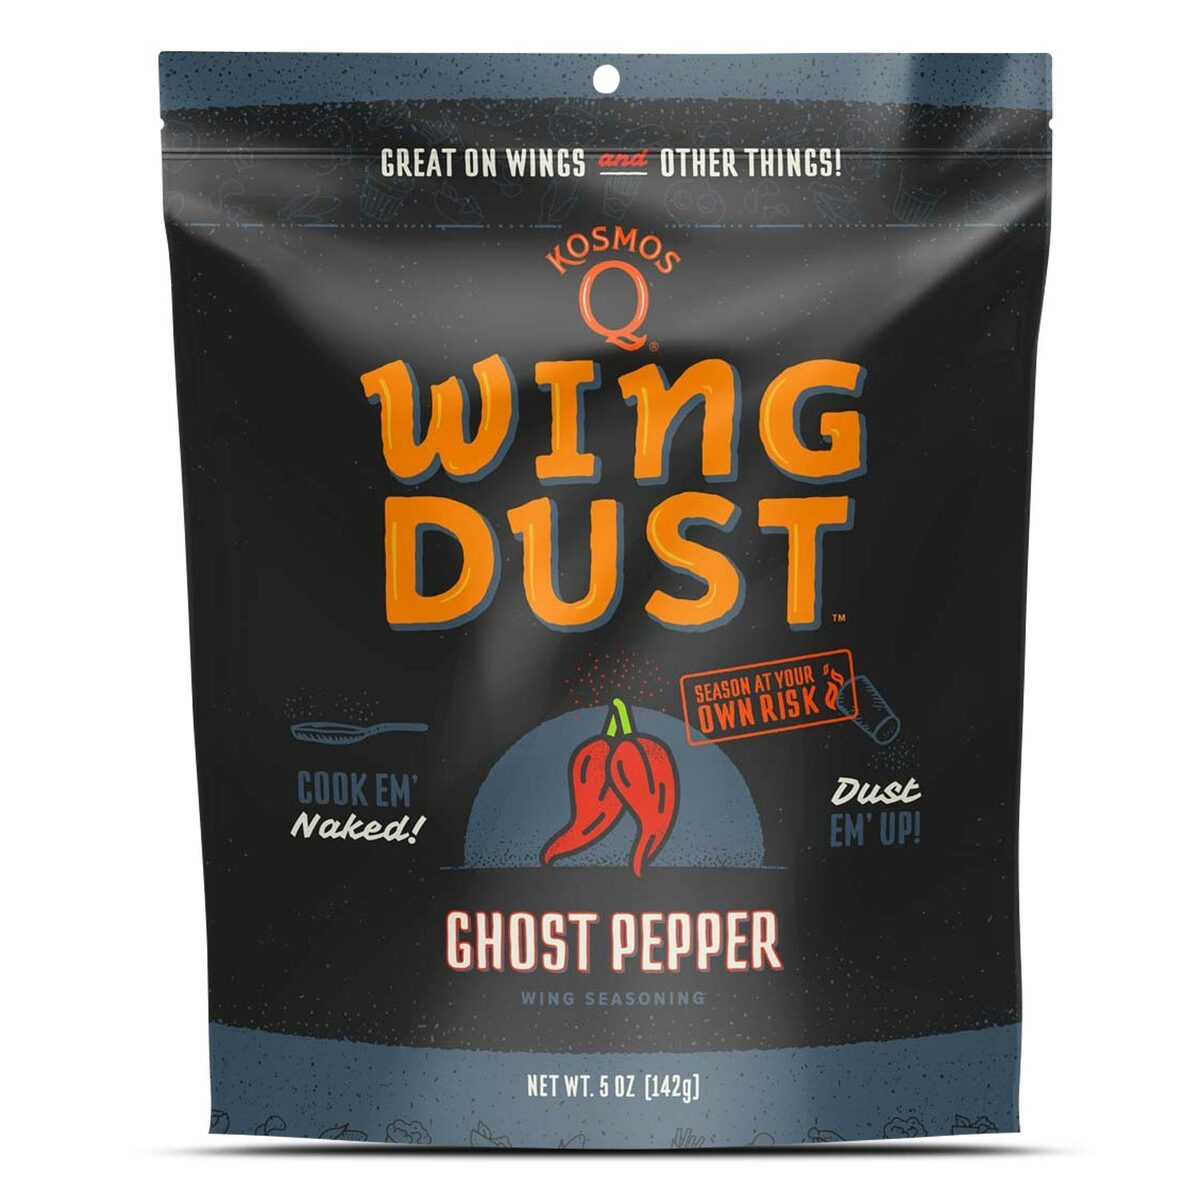 Kosmo's Q Wing Dust™ Single Bag Ghost Pepper Wing Seasoning